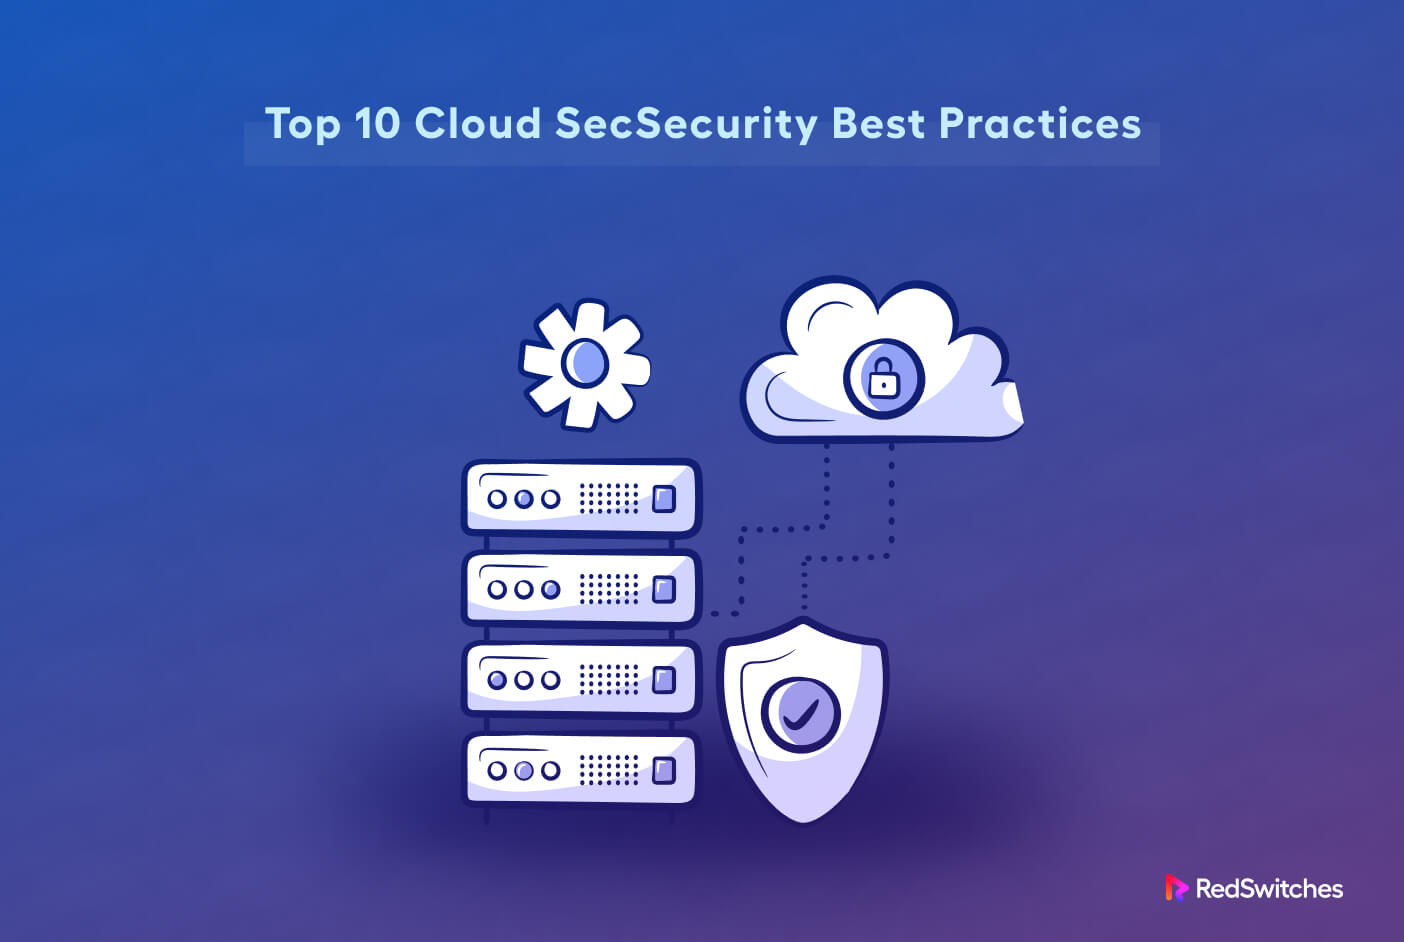 Cloud security best practices